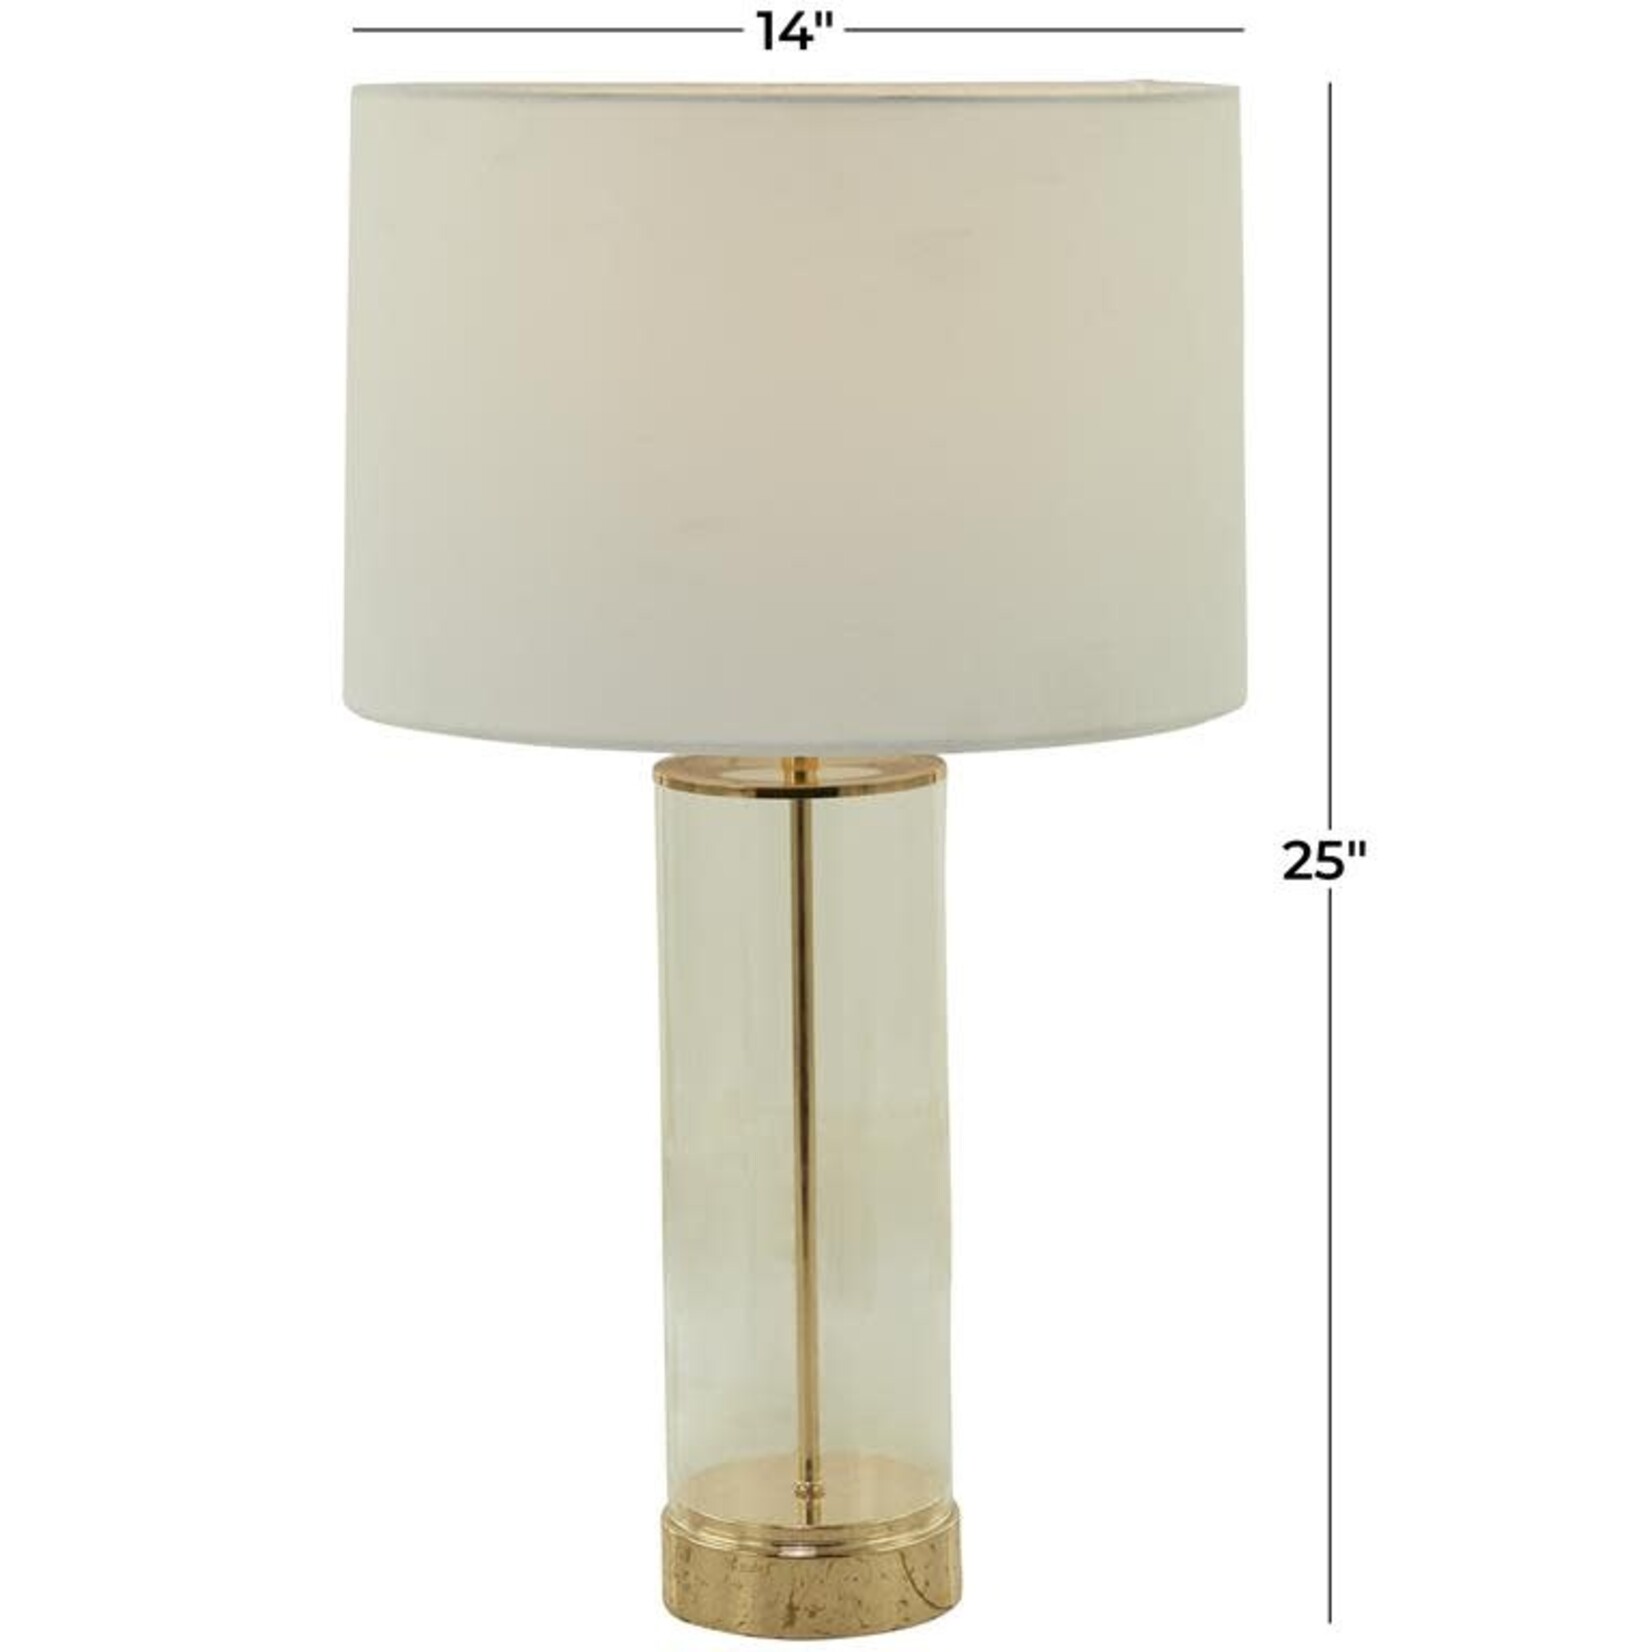 UMA Enterprises 27048  Gold Tempered Glass Base Table Lamp 14"x14"x25"